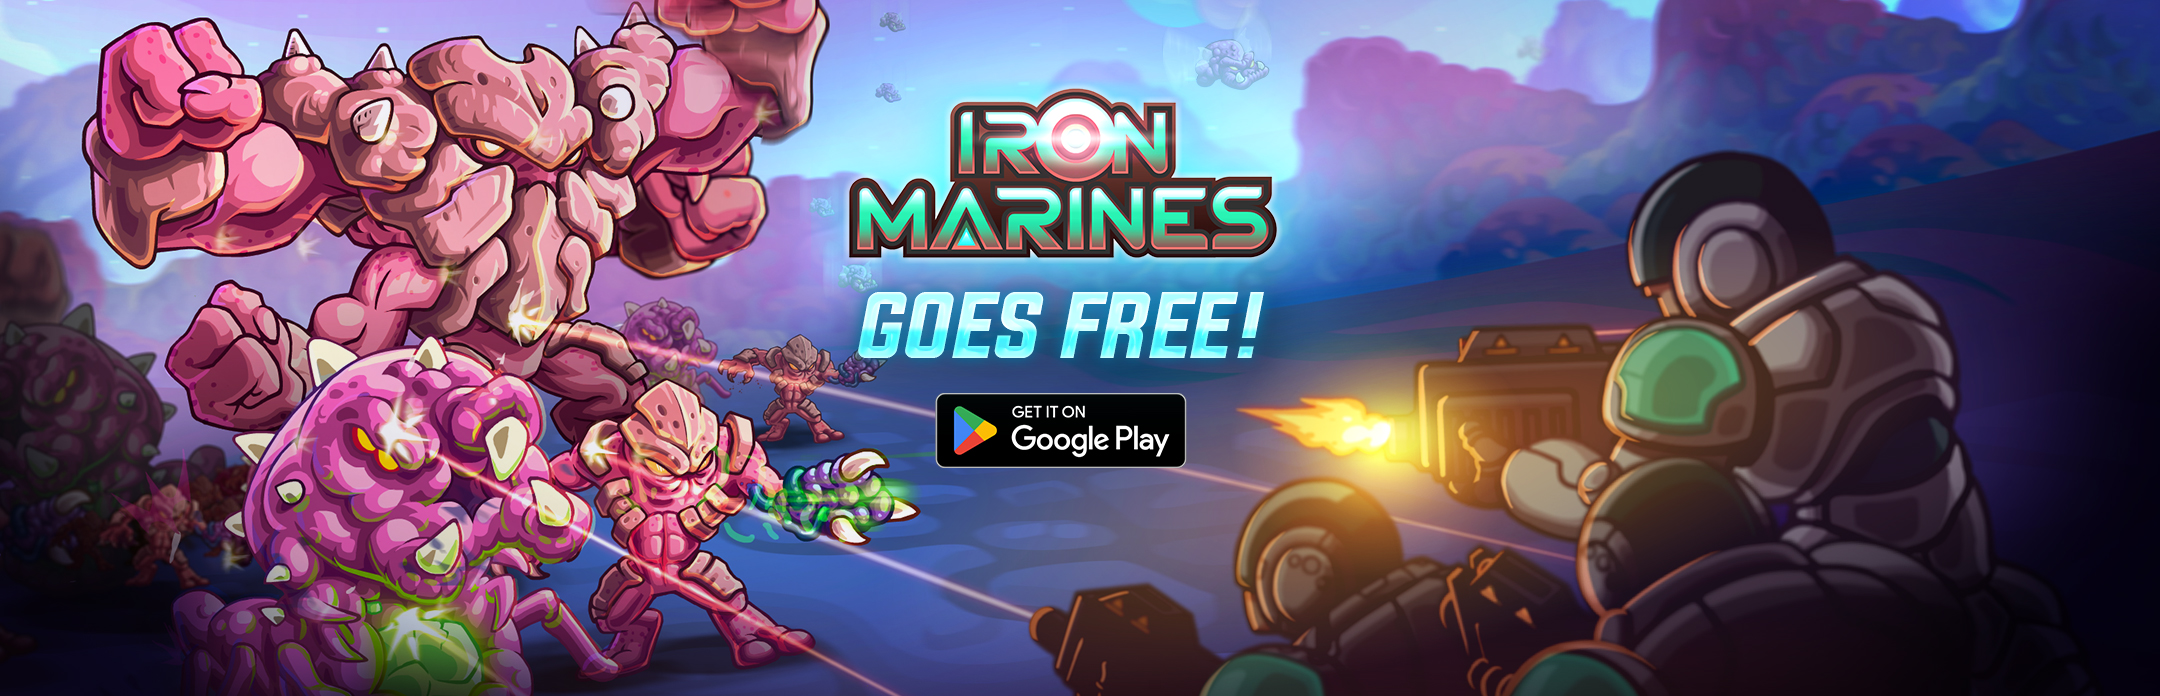 IRON MARINES GOES FREE ON GOOGLE PLAY! - Ironhide Game Studio